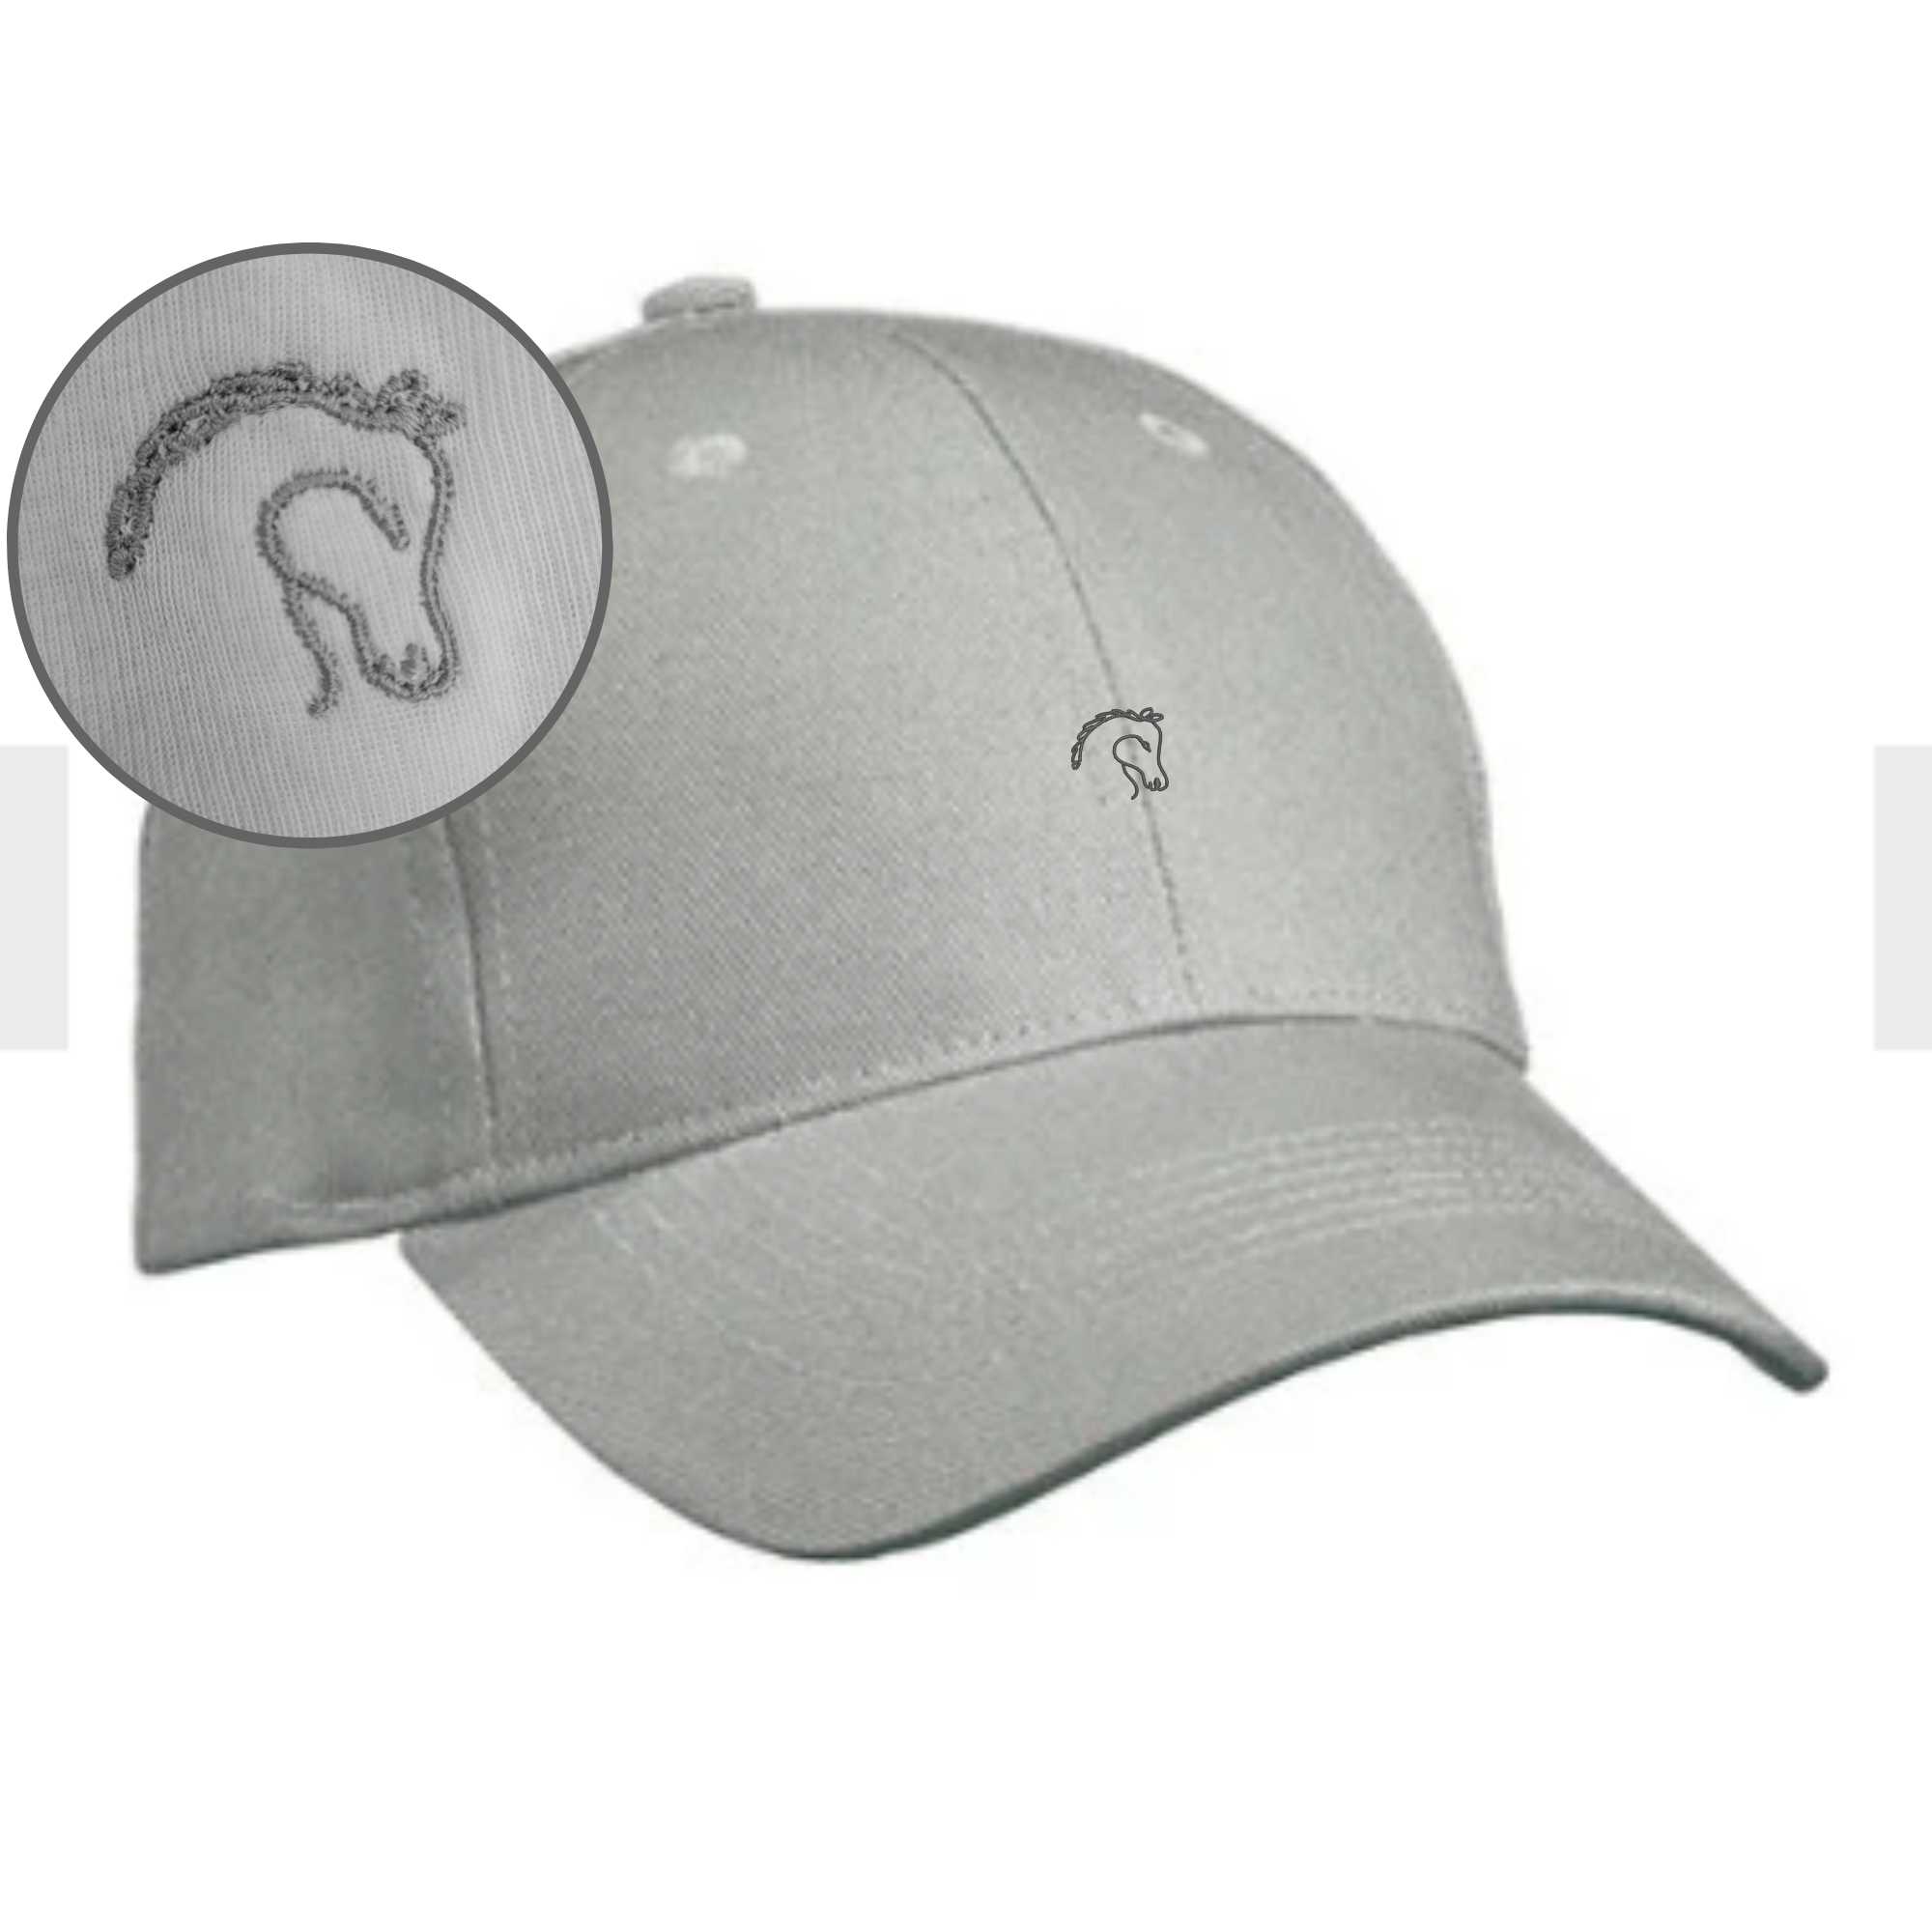 Cap mit Pferdekopf-Motiv bestickt in Farbe Grau